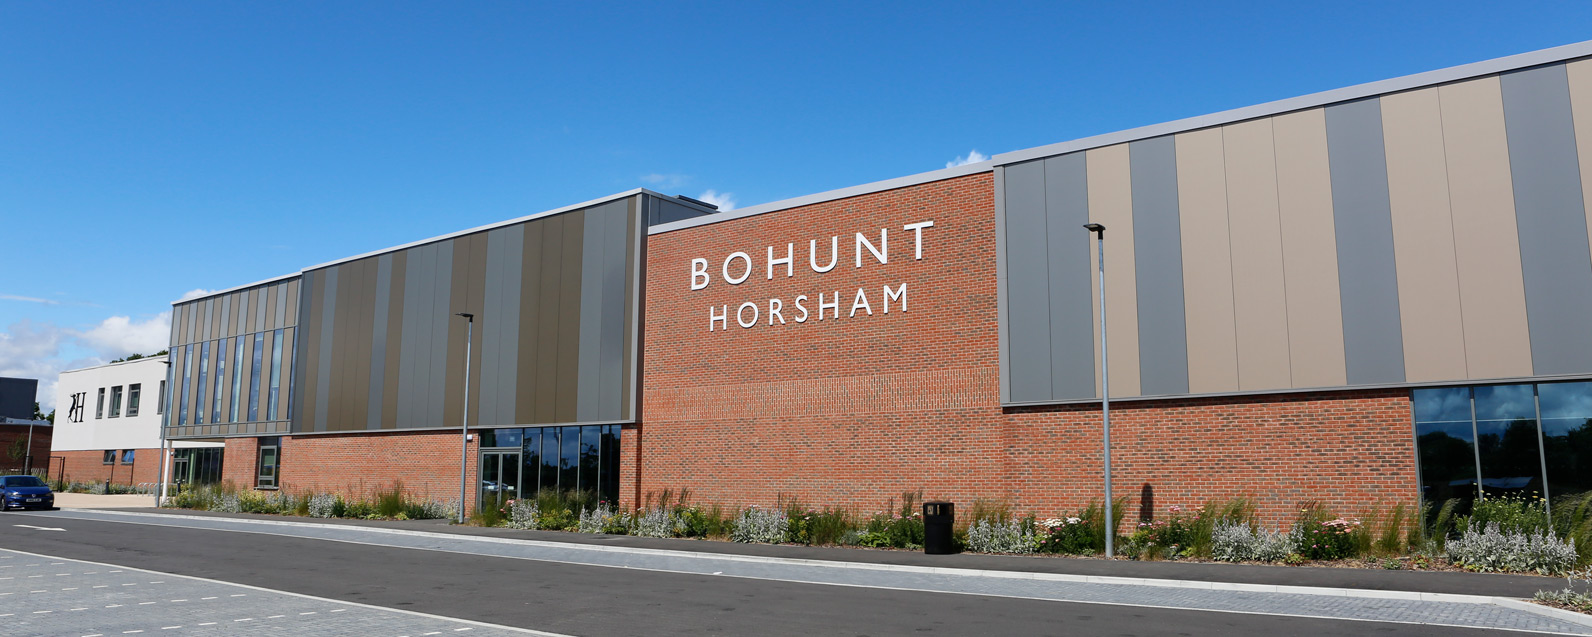 LSI-Architects-Bohunt-Horsham